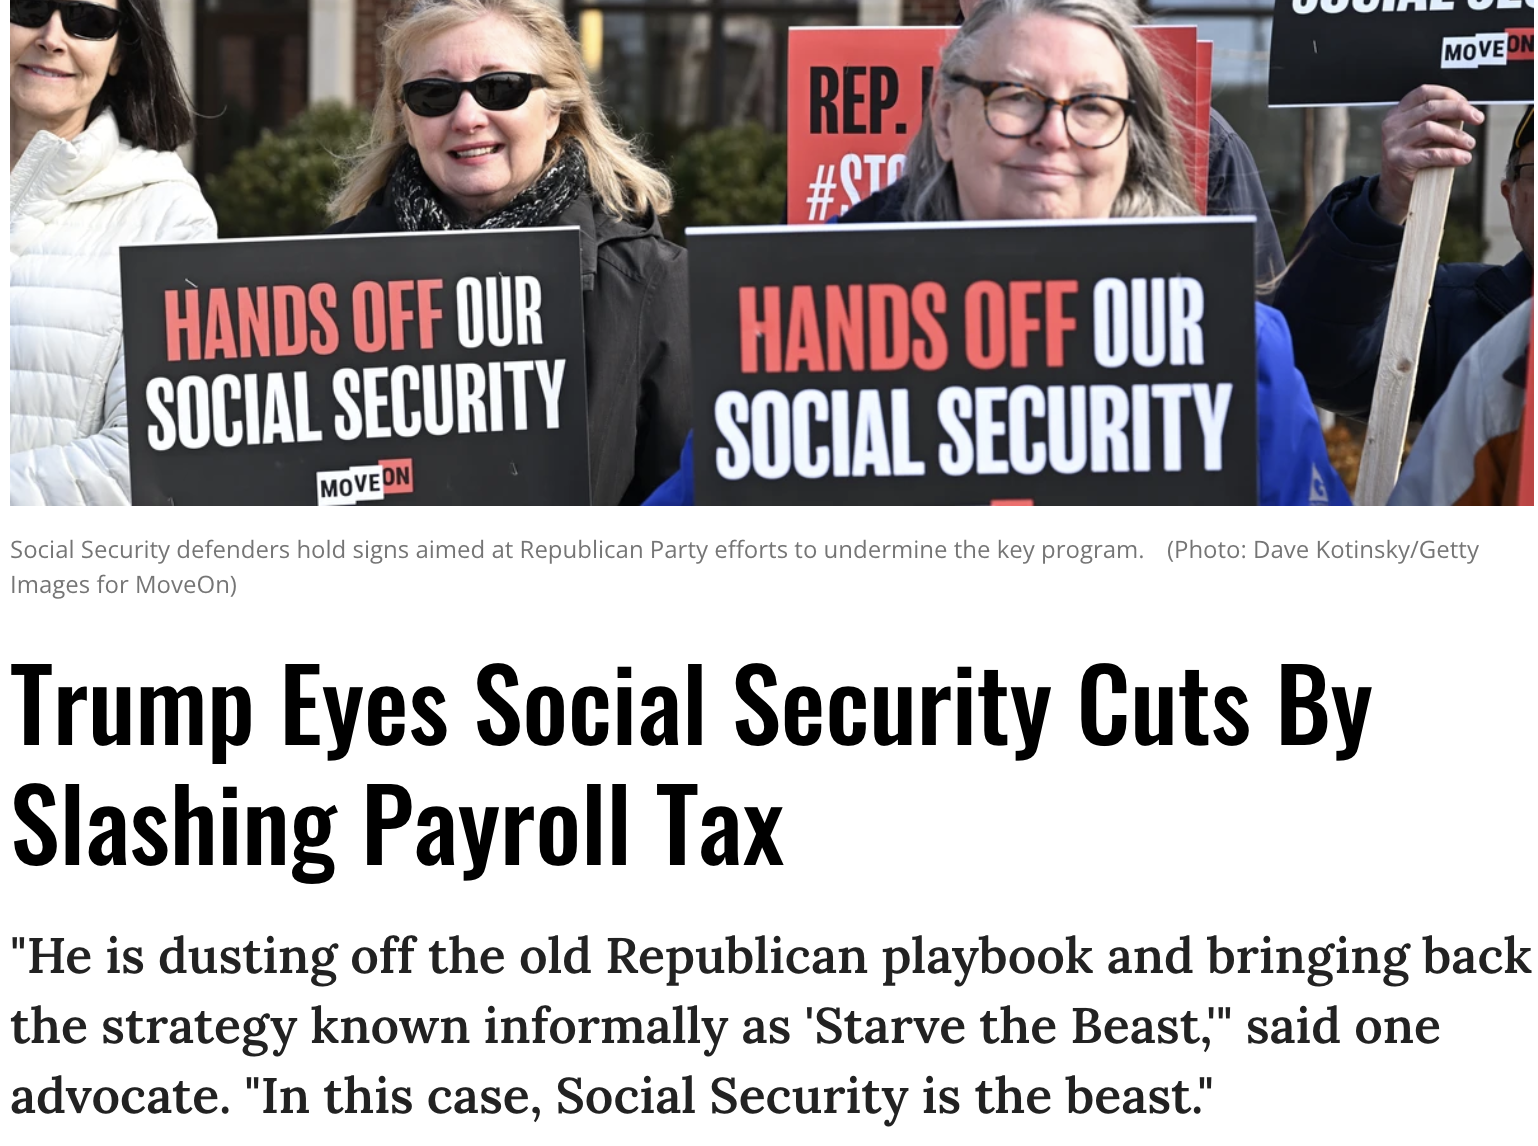 Headline from Common Dreams: Trump Eyes Social Security Cuts by Slashing Payroll Tax